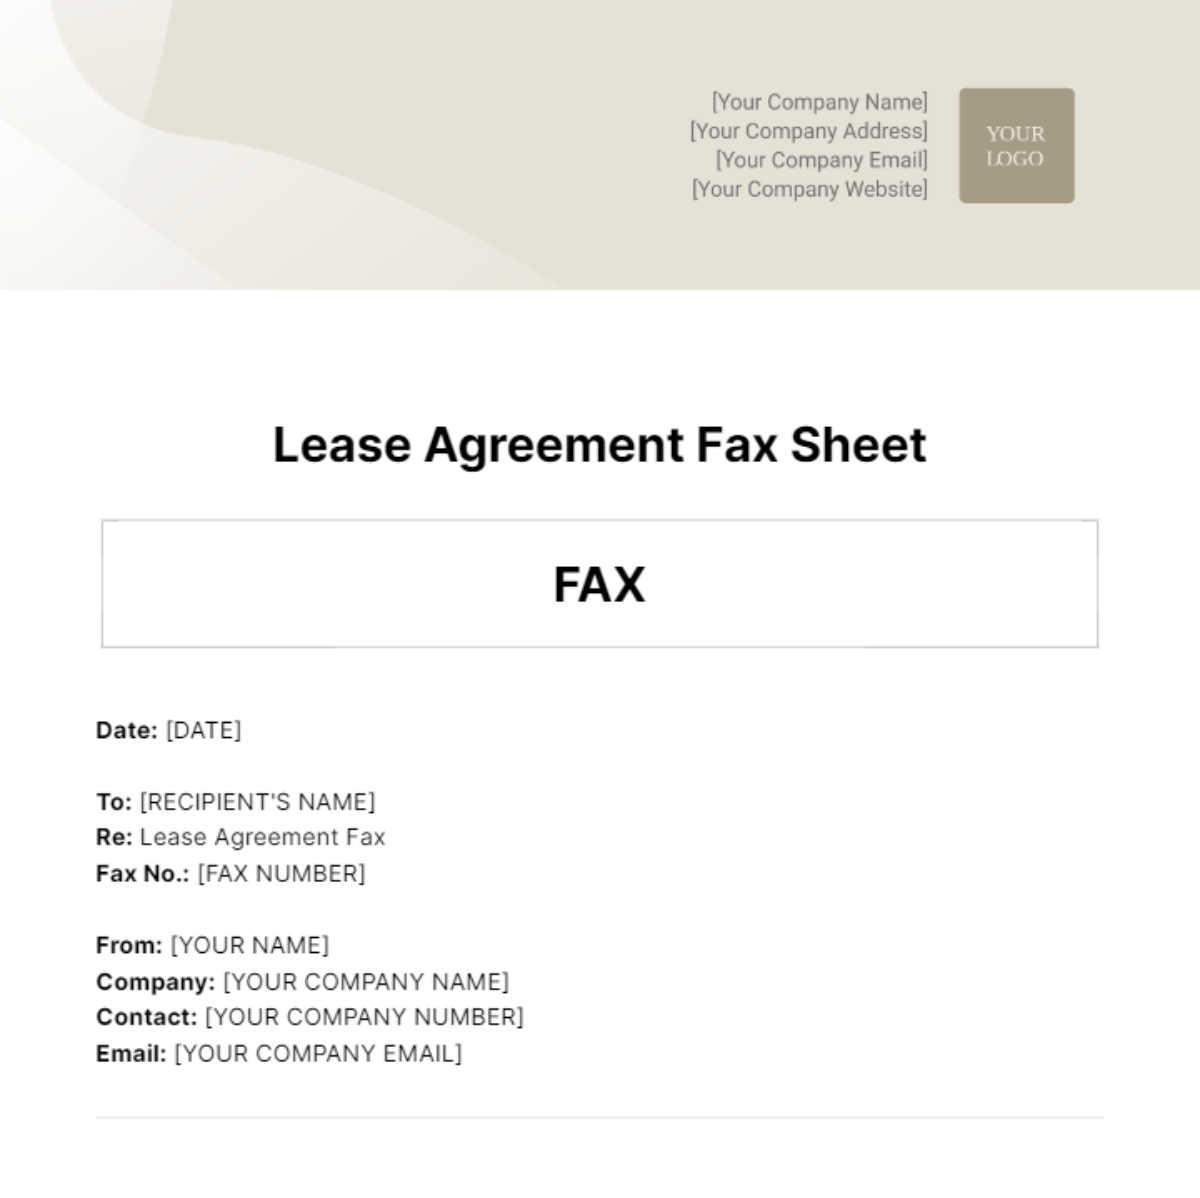 Lease Agreement Fax Sheet Template